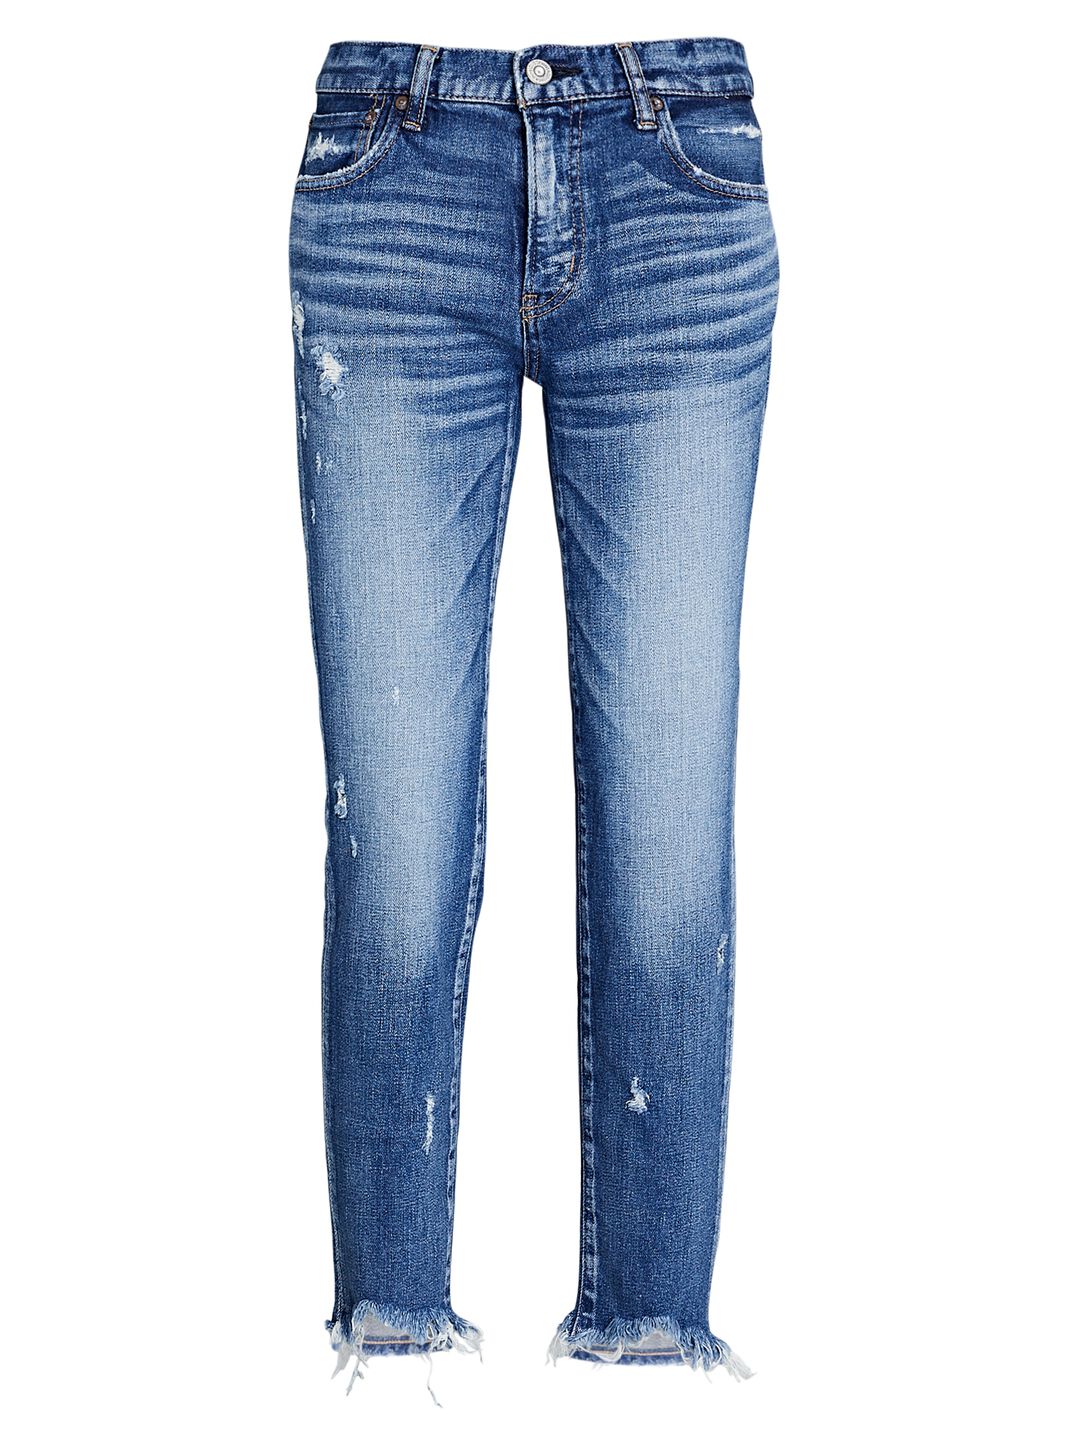 Daleville Cropped Skinny Jeans